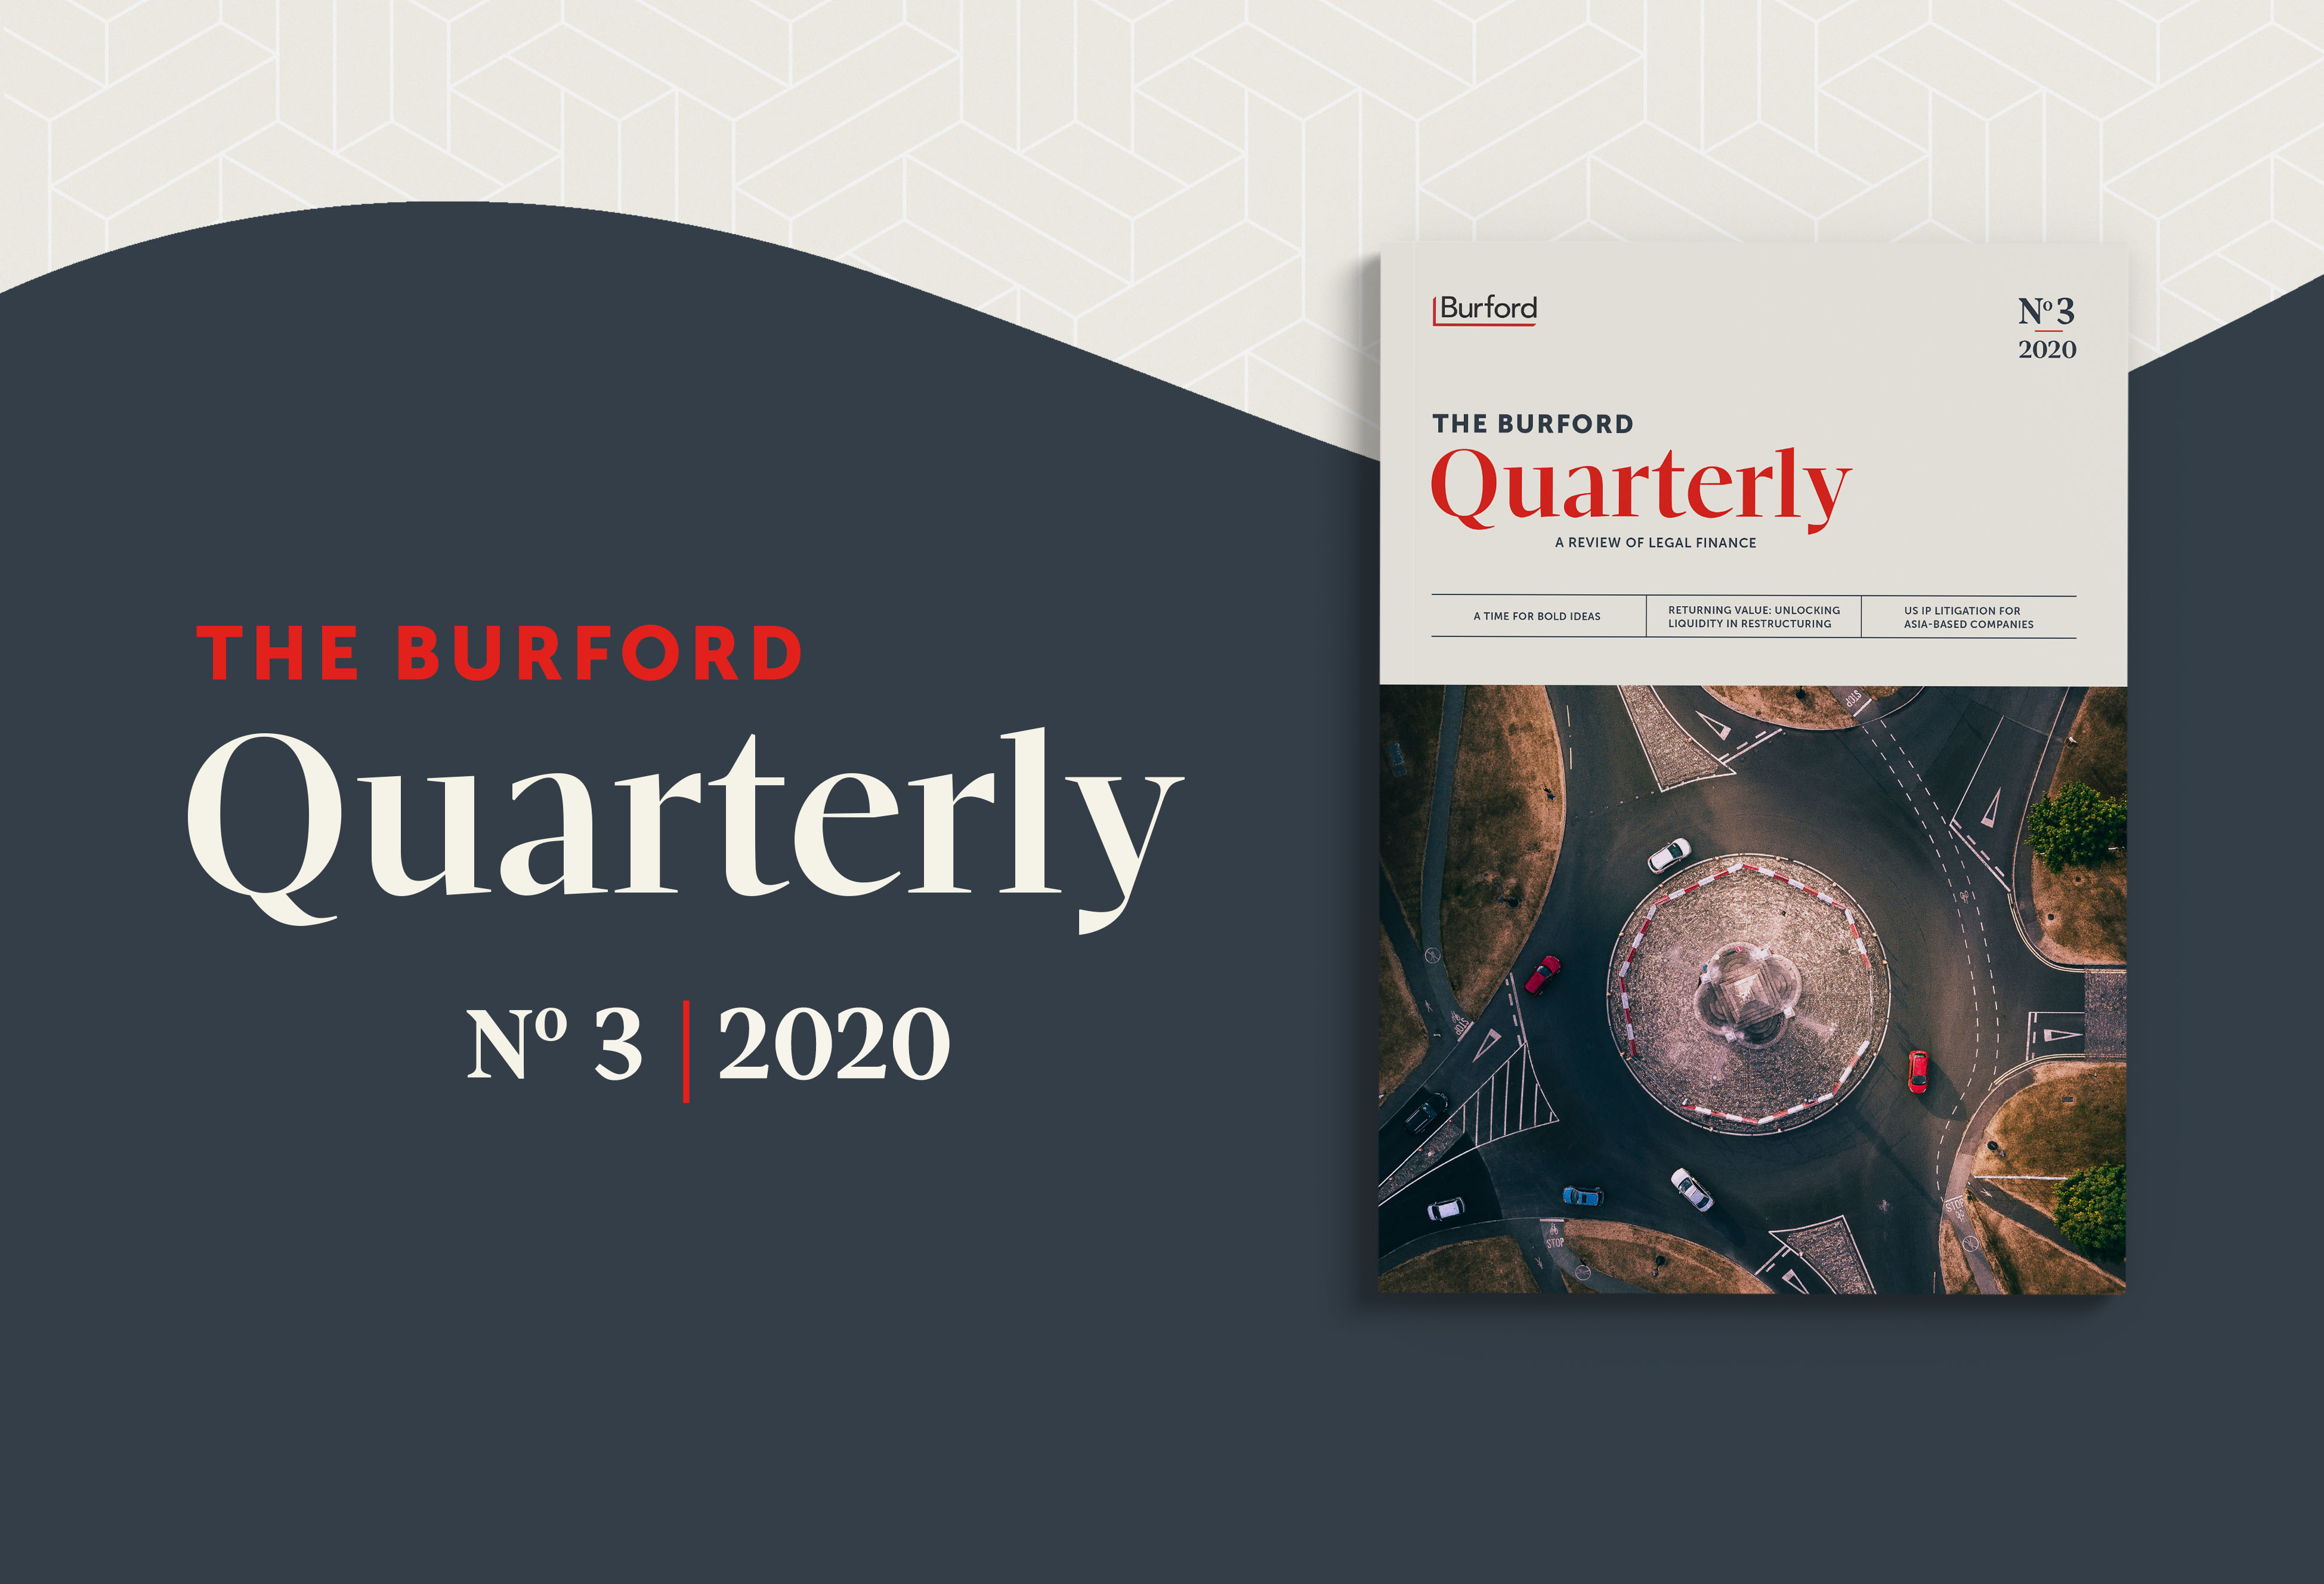 Quarterly No 3 2020 Website Thumbnail (New Aspect Ratio)